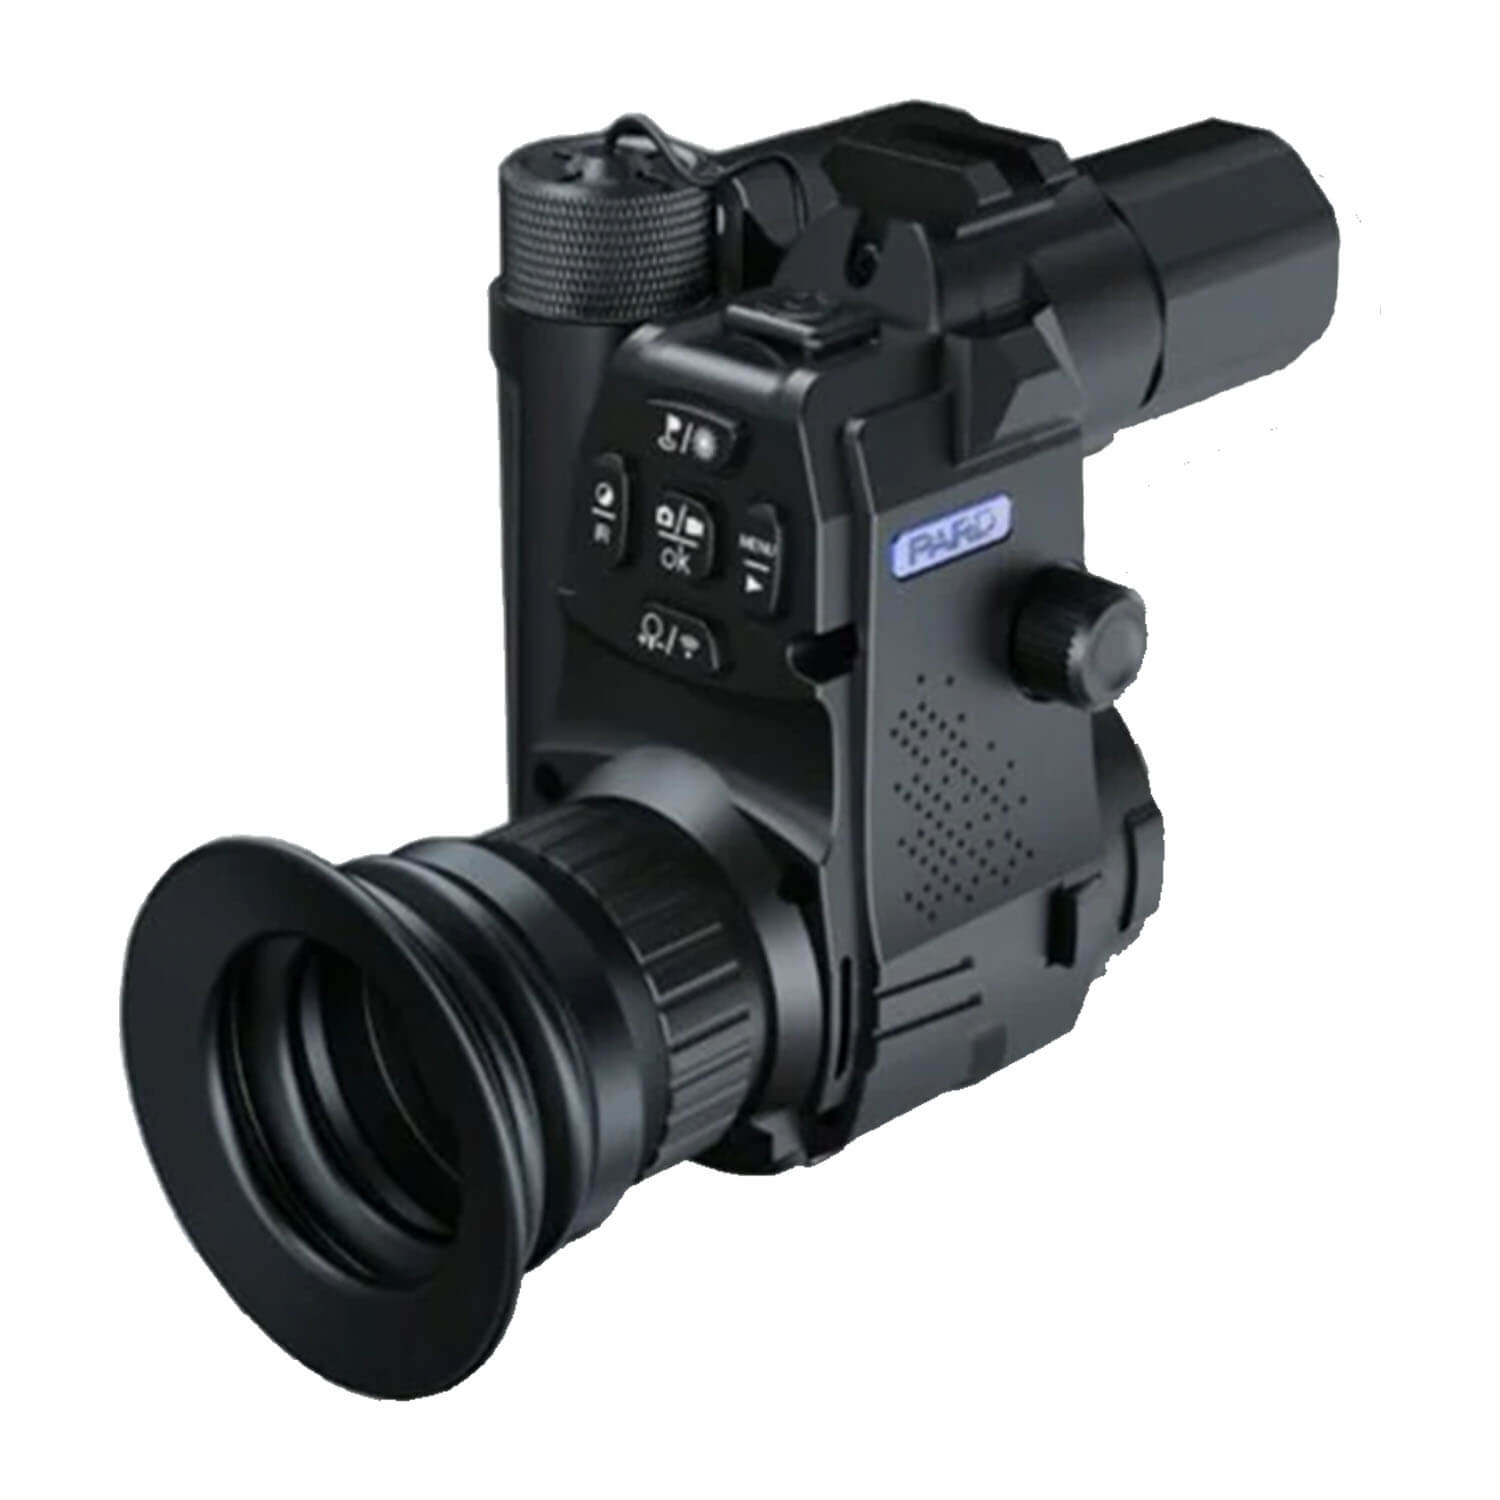 Pard night vision strap on 007SP LRF 940mn - Fox Hunting